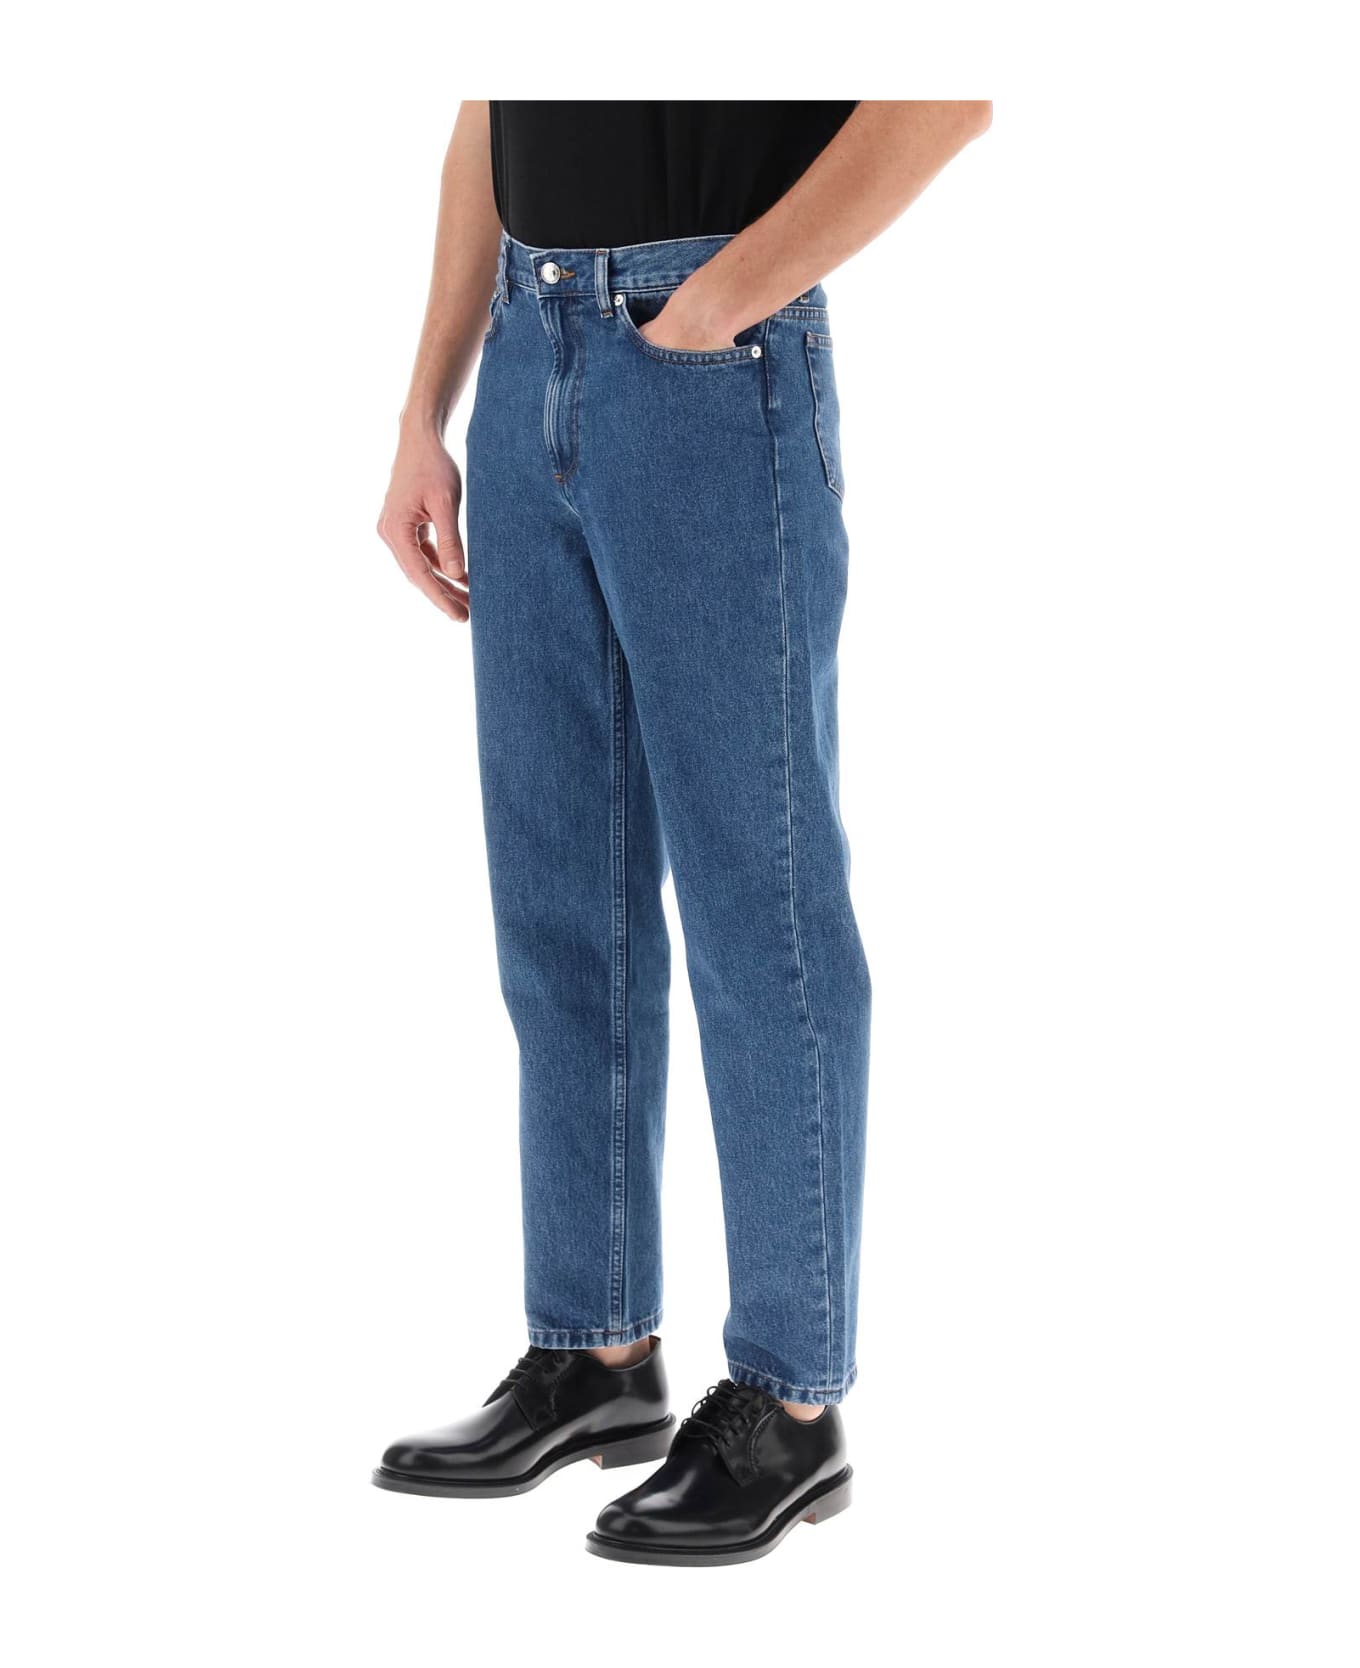 A.P.C. Martin Straight Jeans - Ial Washed Indigo